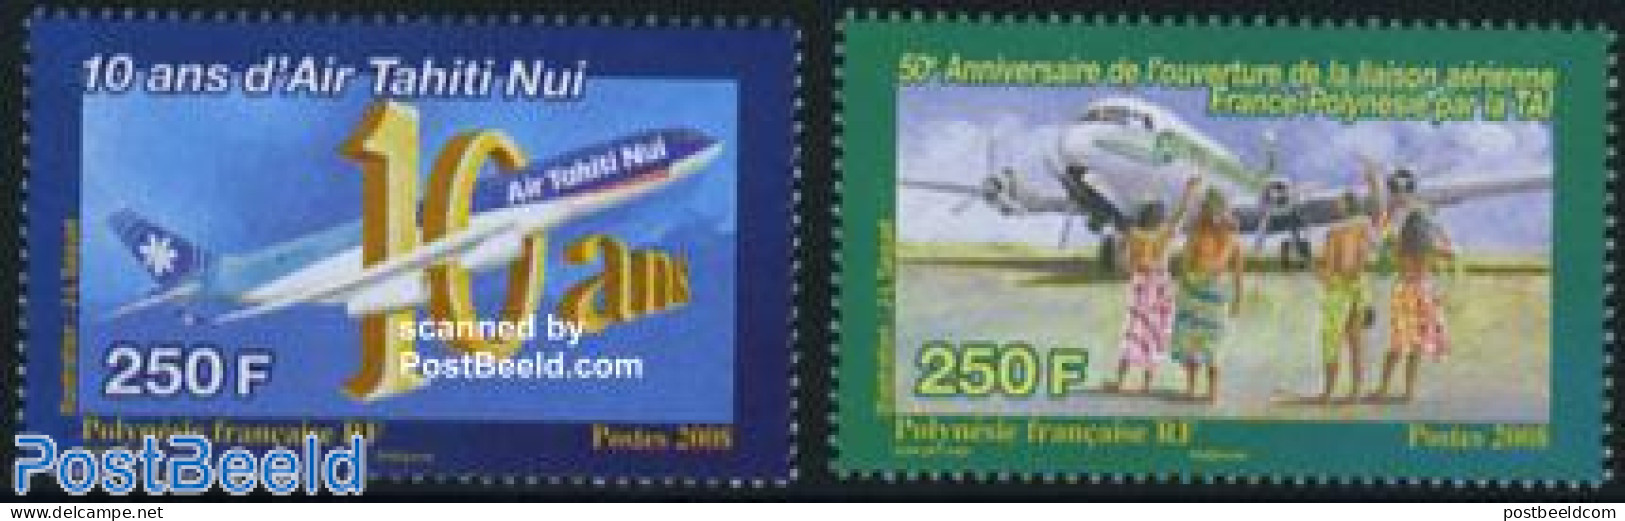 French Polynesia 2008 Civil Aviation 2v, Mint NH, Transport - Aircraft & Aviation - Neufs